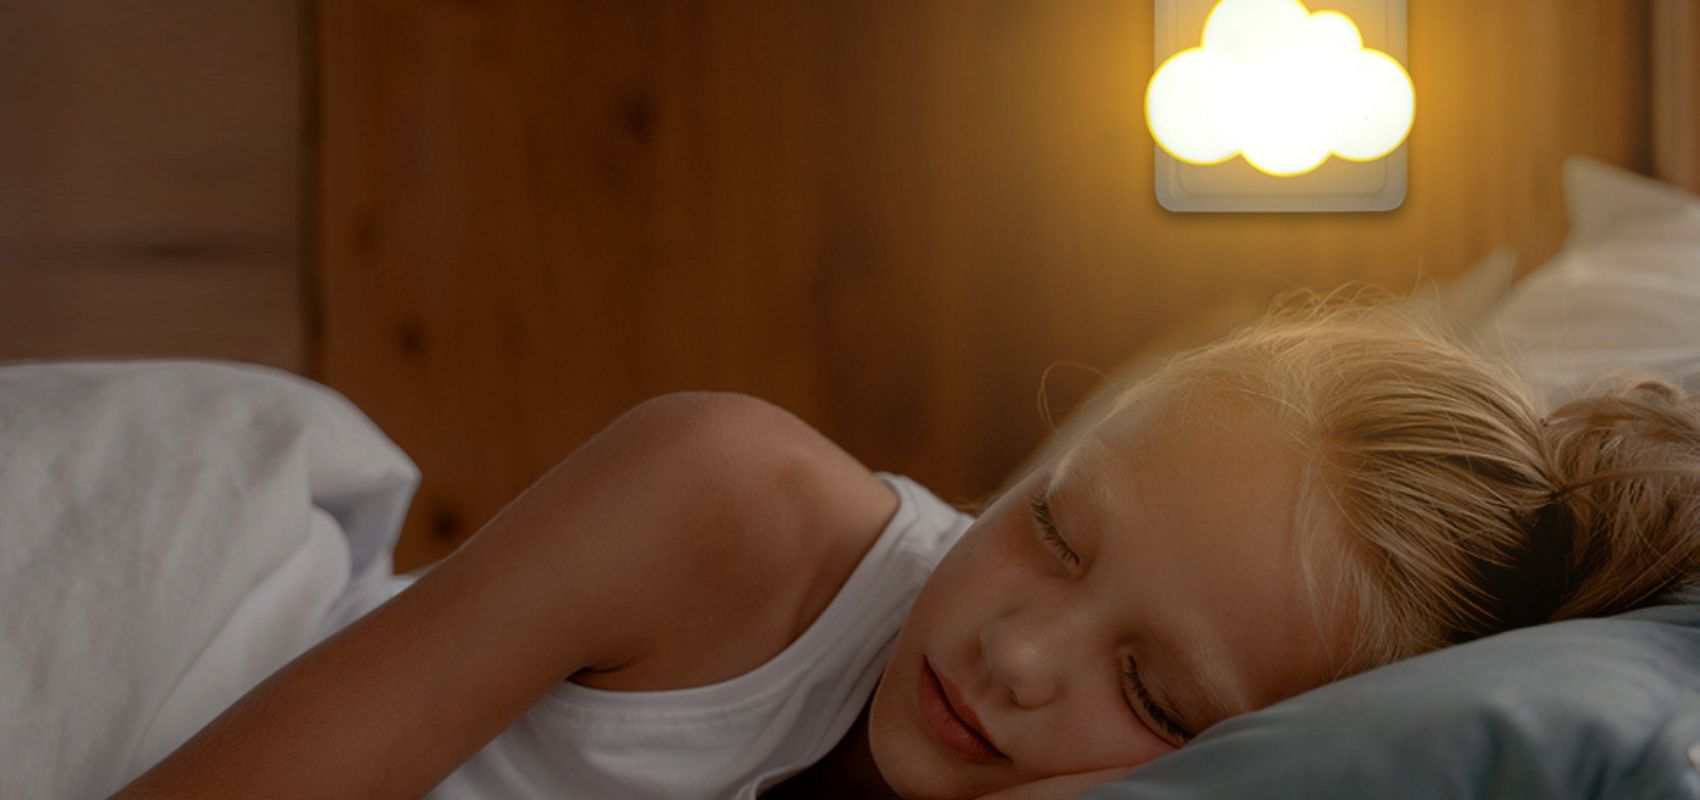 petite fille qui dort avec une veilleuse murale allumée